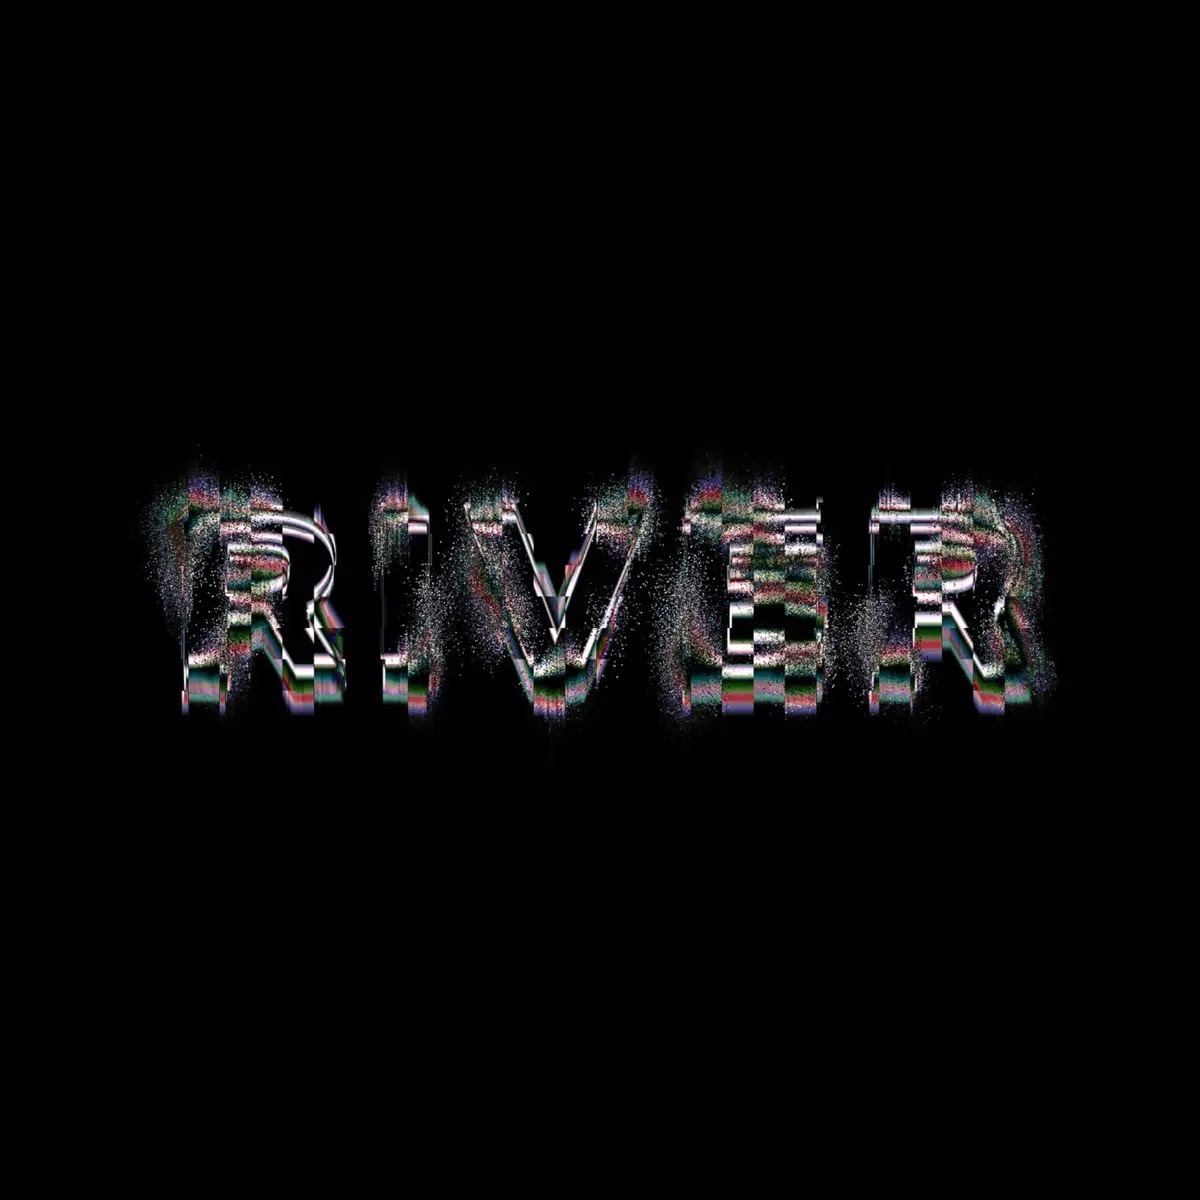 Anonymouz - River lyrics, lirik terjemahan indonesia arti anonymouz - river, vinland saga season 2 opening, digital single, info lagu